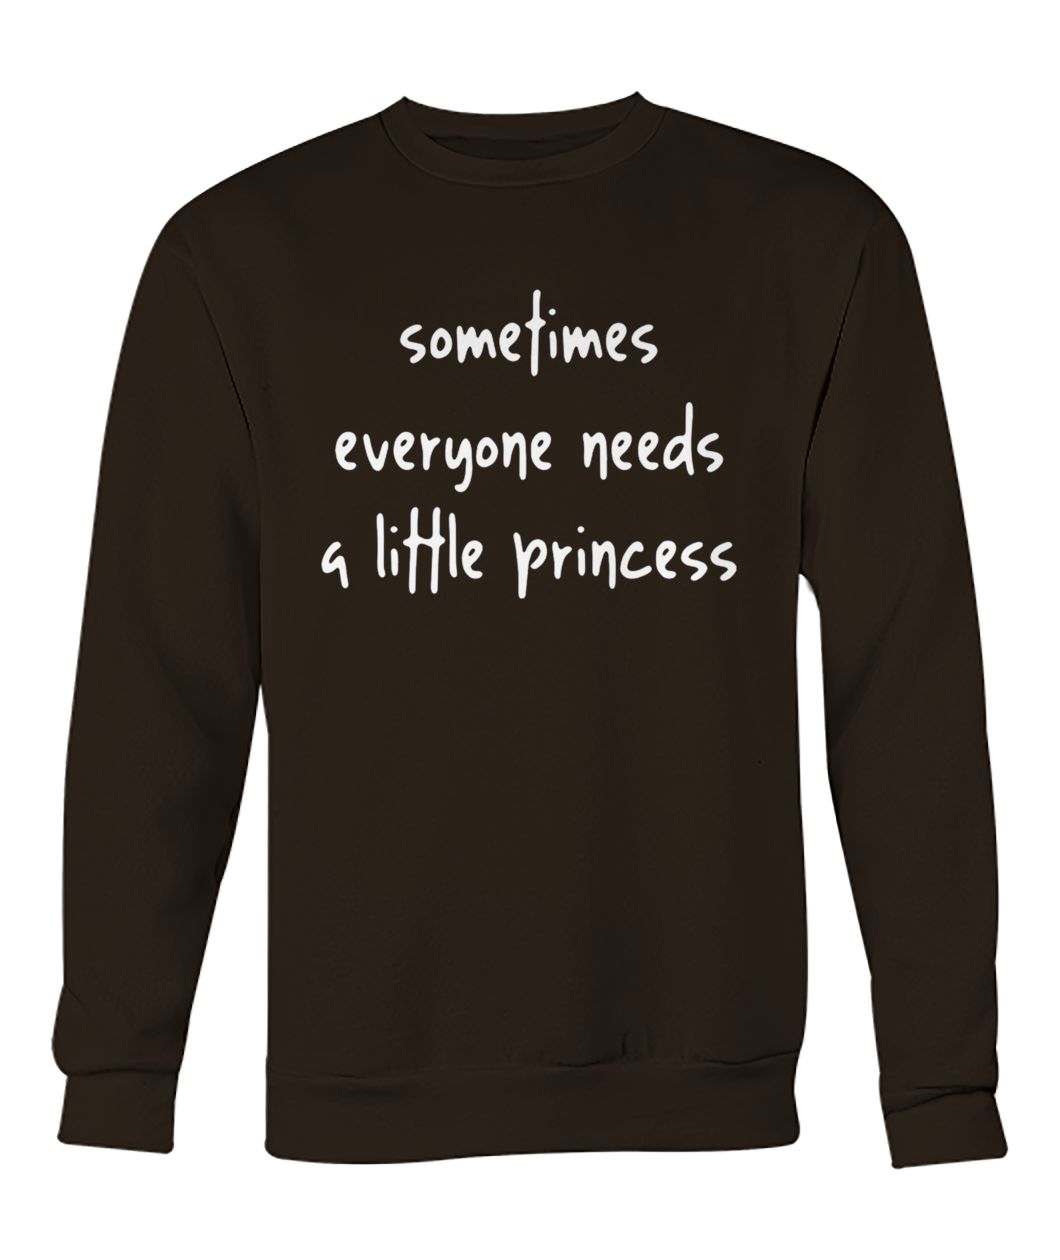 Sometimes everyone needs a little princess crew neck sweatshirt